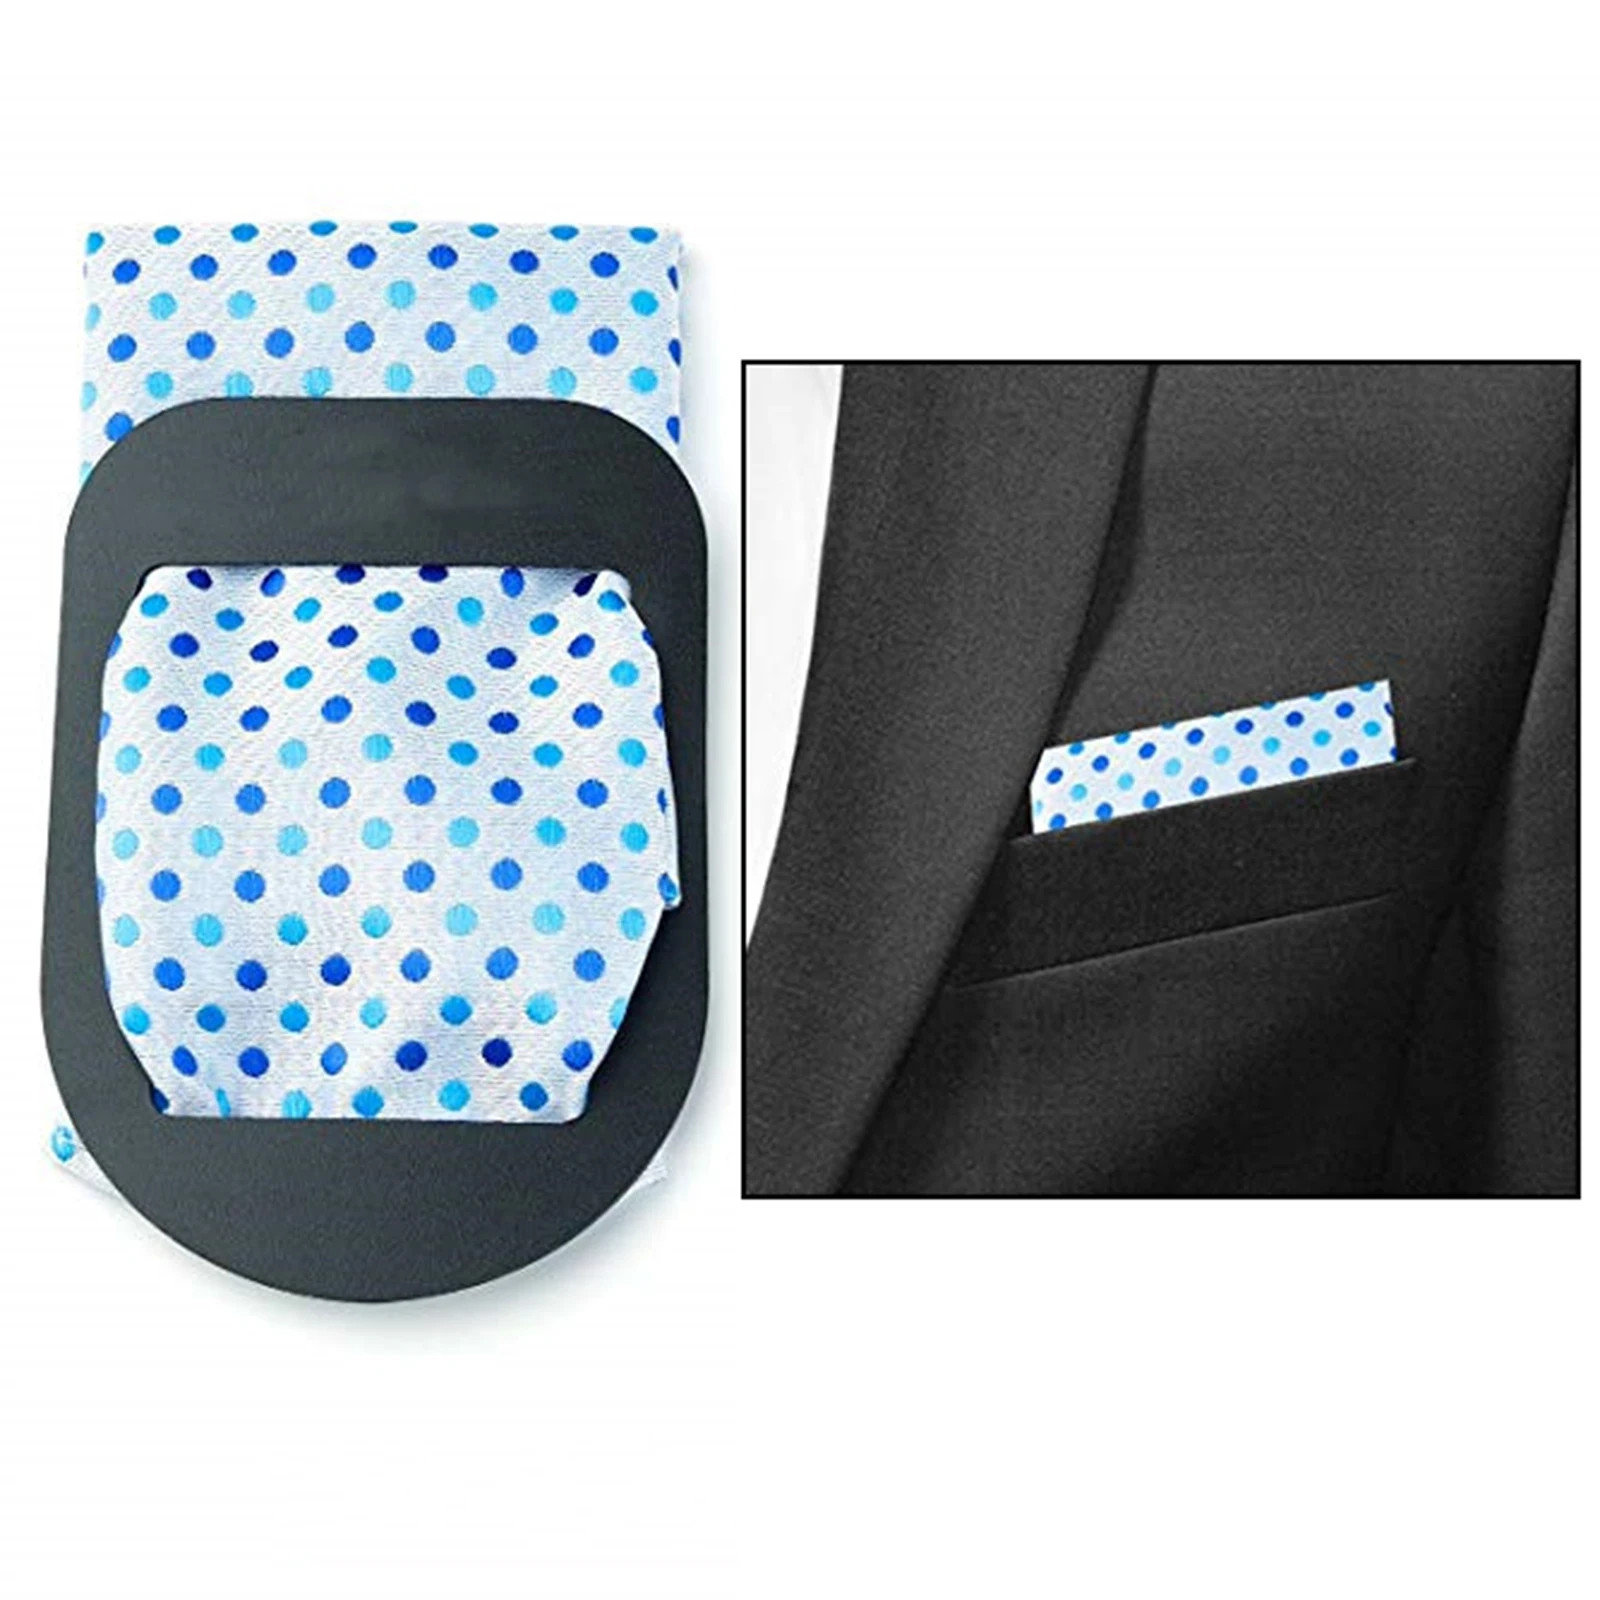 3pcs Pocket Square Holder Keeper Handkerchief For Men Wedding Accessory Black